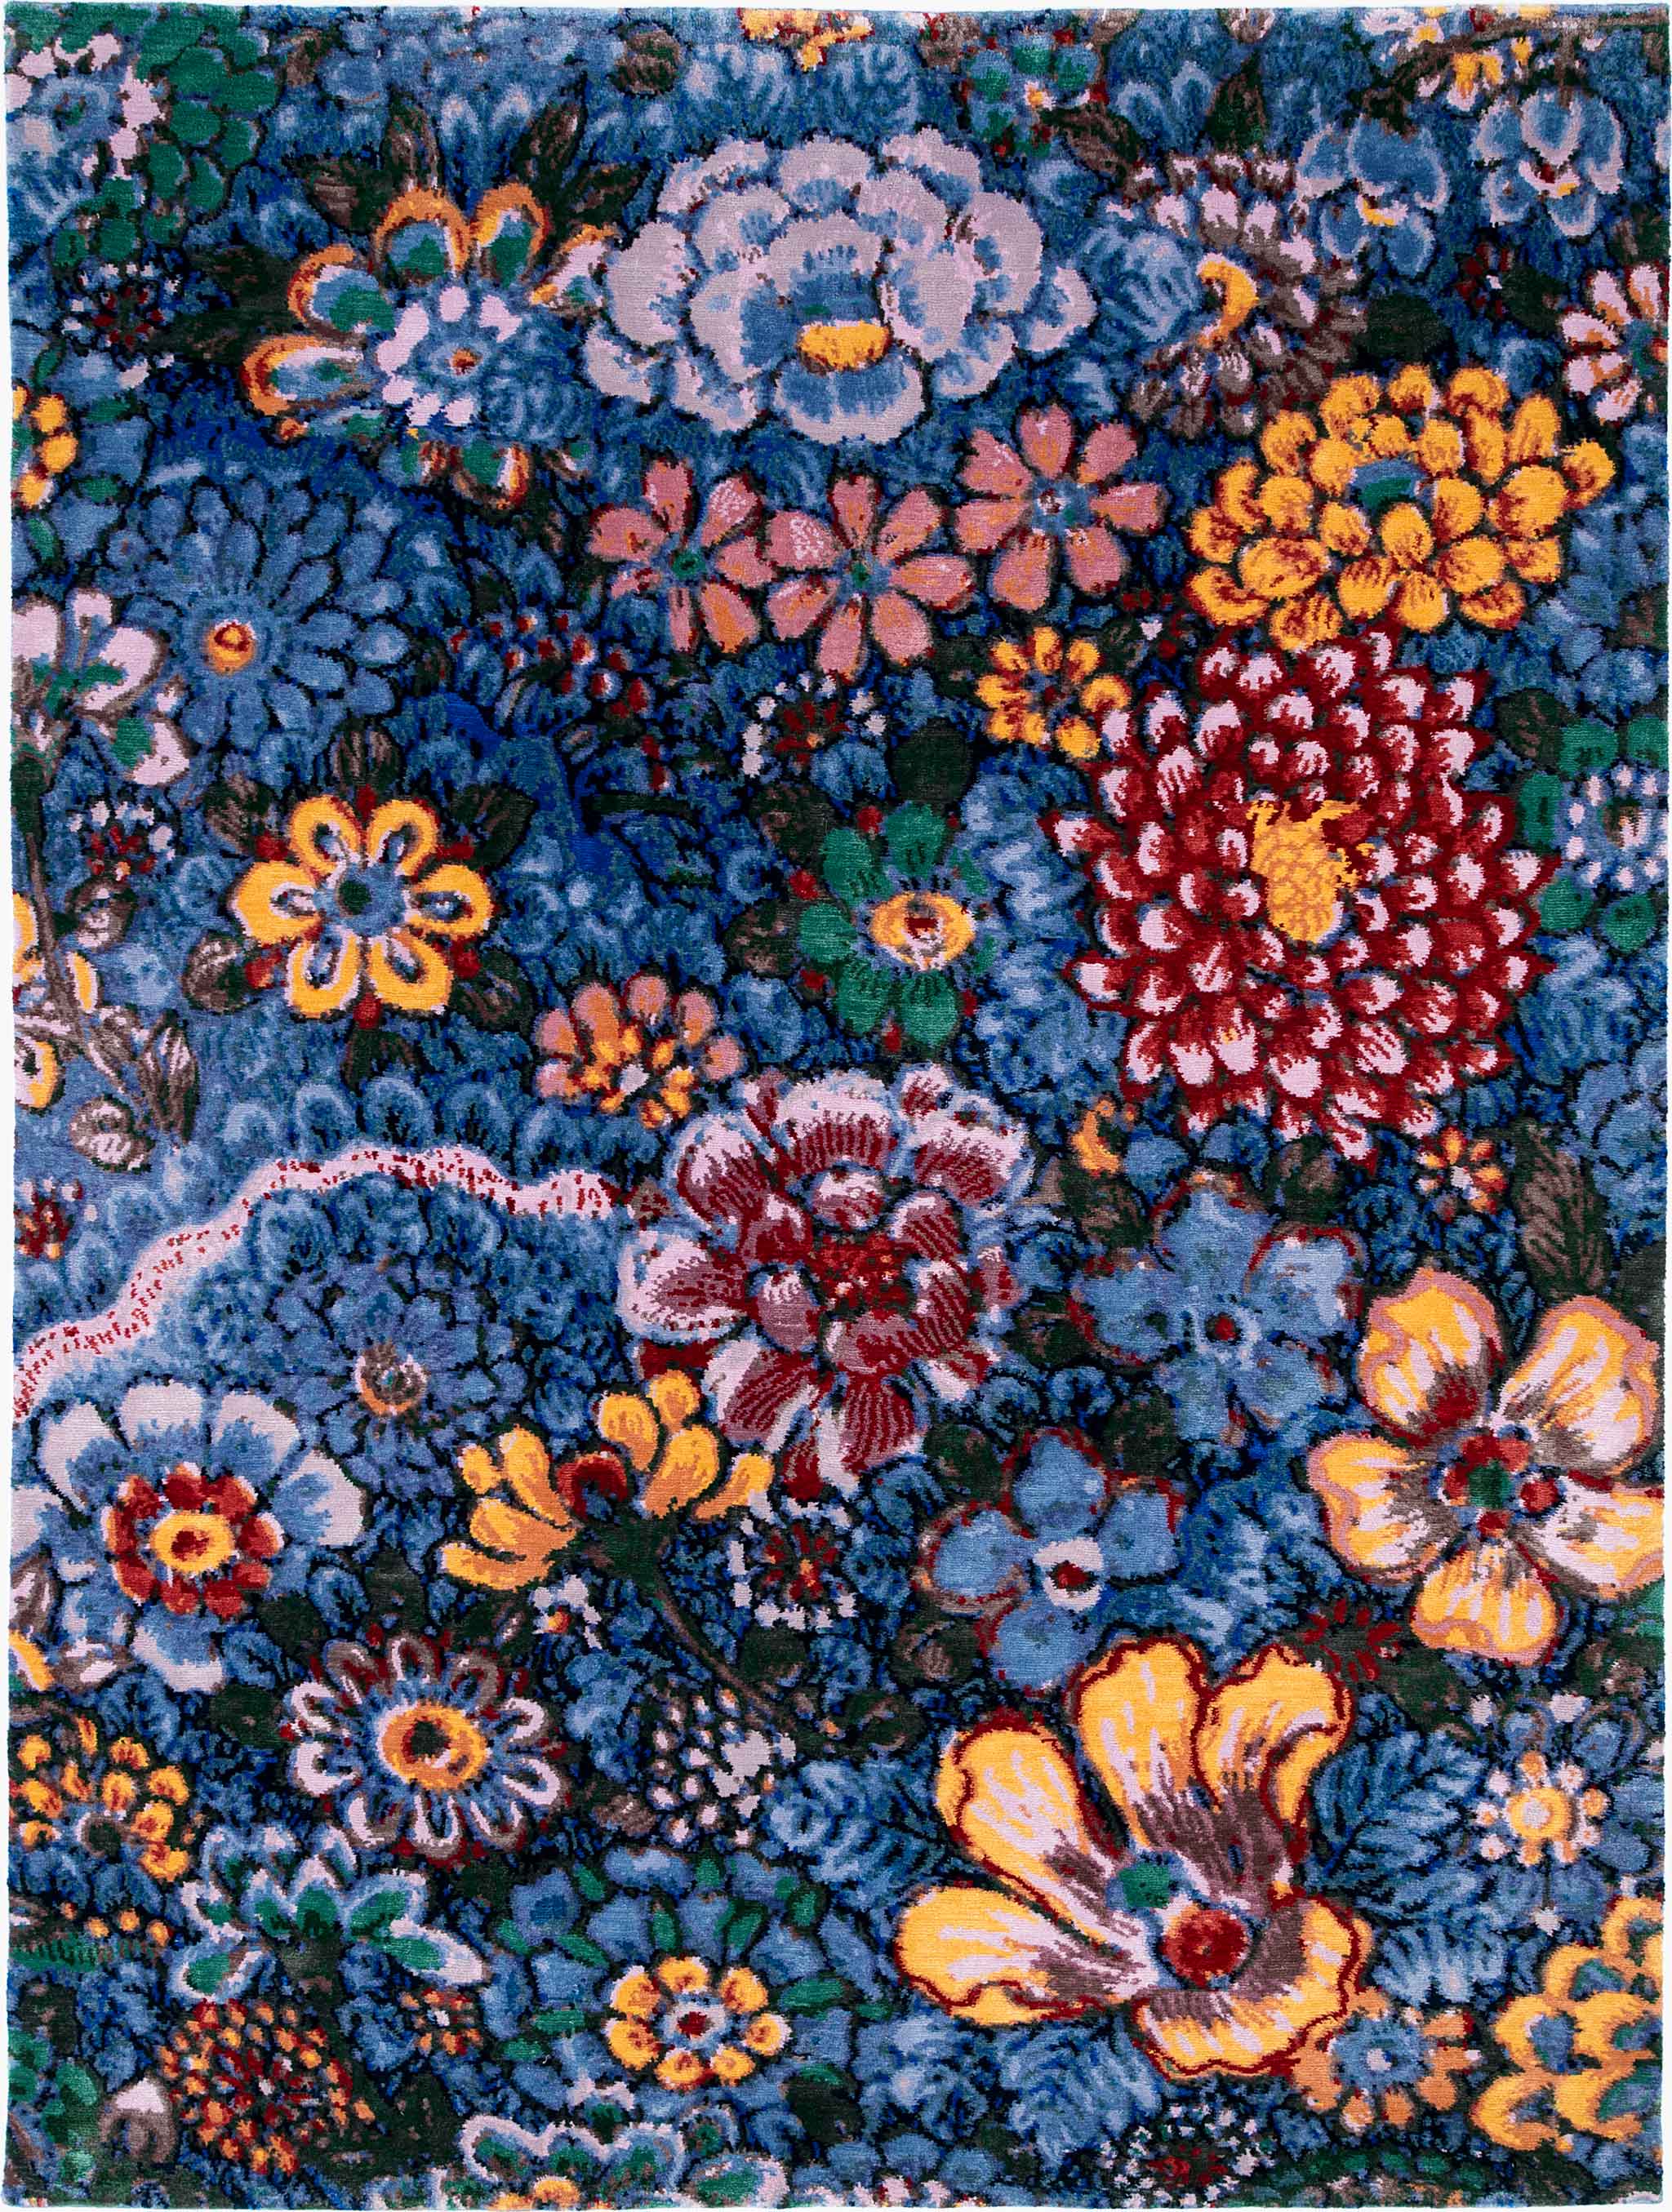 'Ten Thousand Flowers' carpet by Joseph Carini Carpets inspired by the work of Yuki Hayama. | Image courtesy of Joseph Carini Carpets.